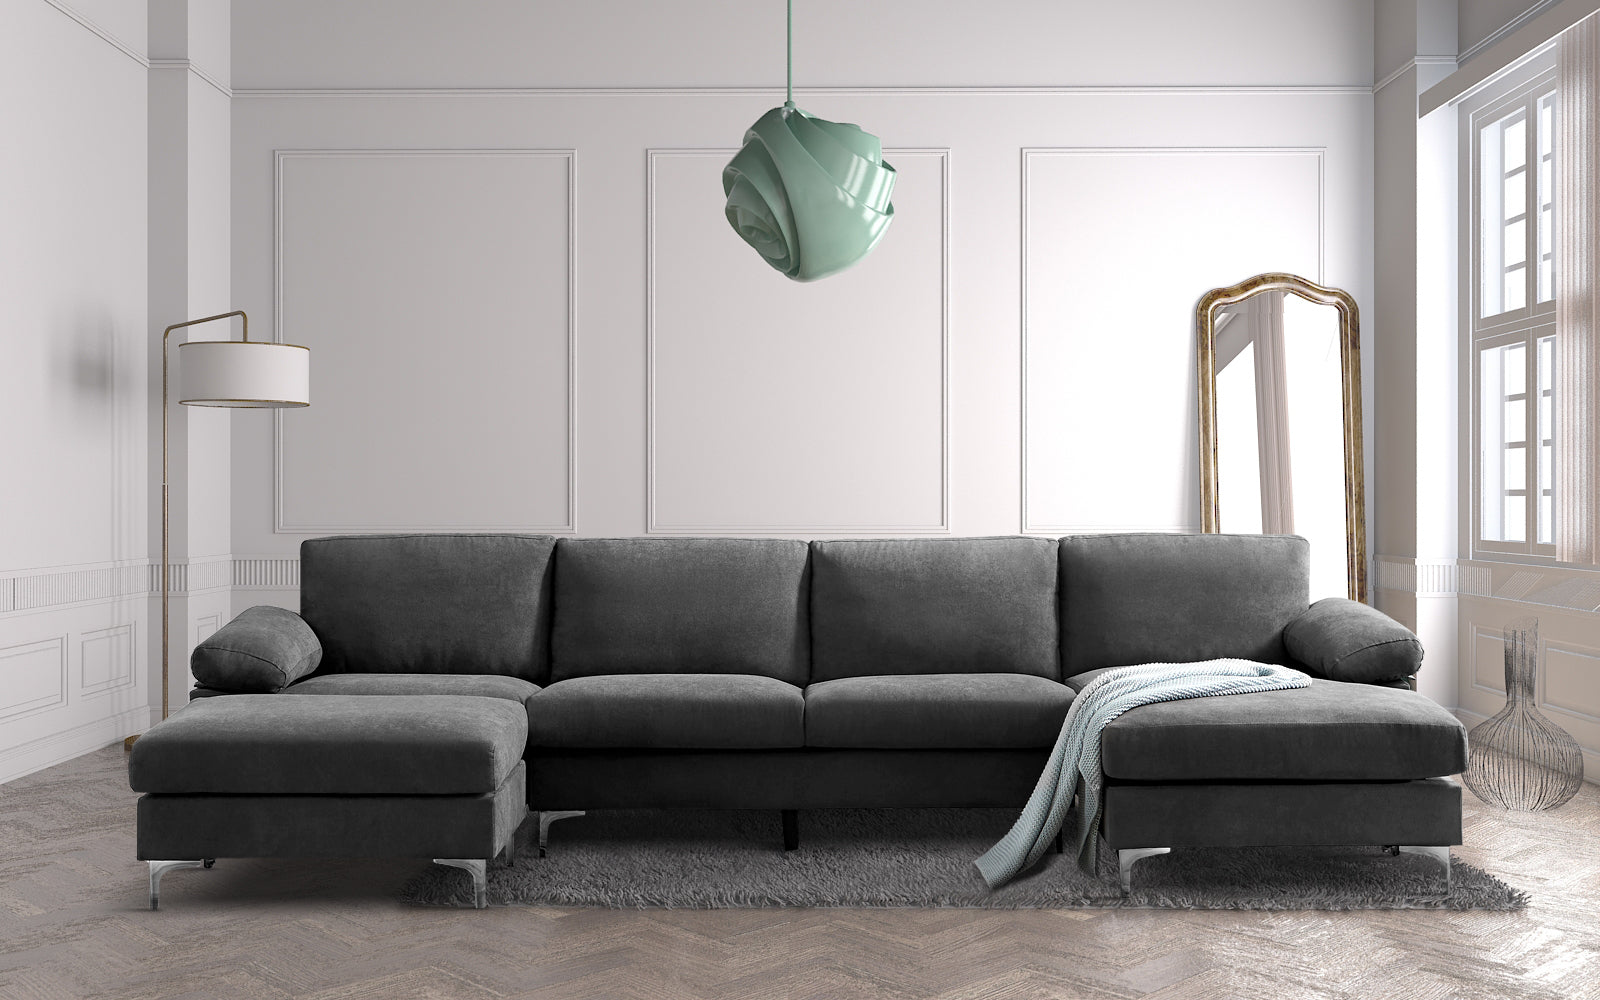 RELAX LOUNGE Convertible Modular Sofa (Gray)